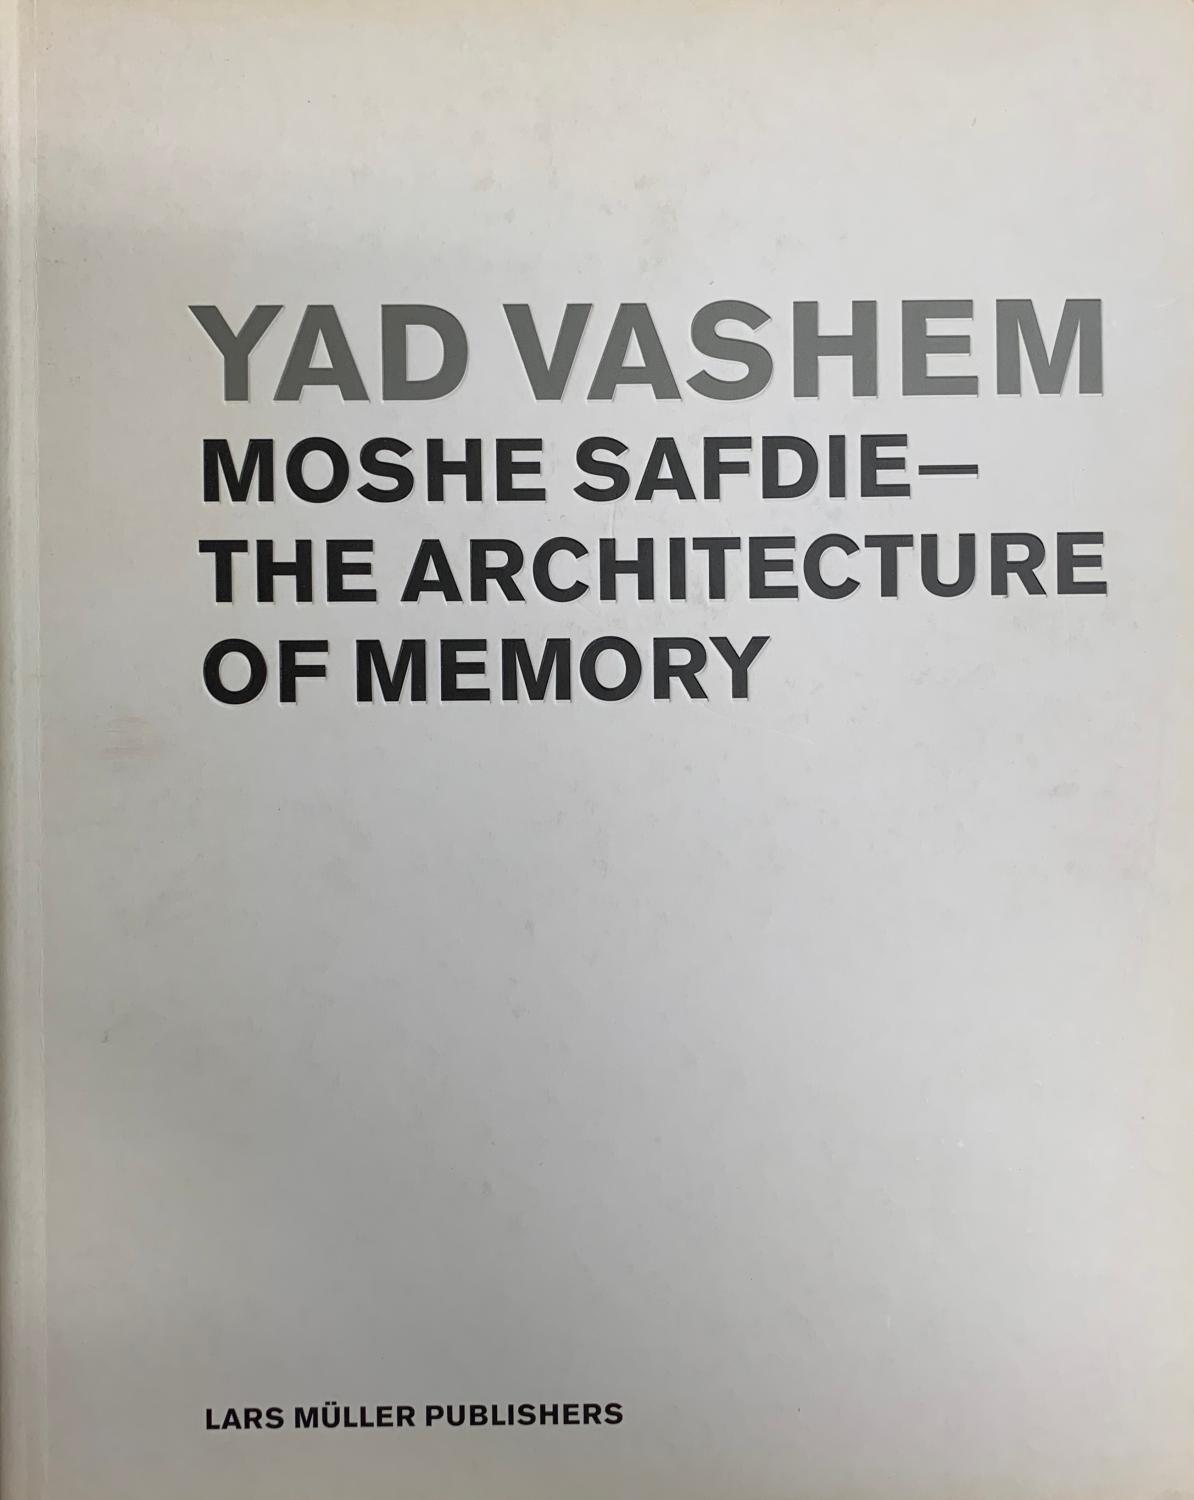 Safdie, Moshe. Yad Vashem. The Architecture of Memory.